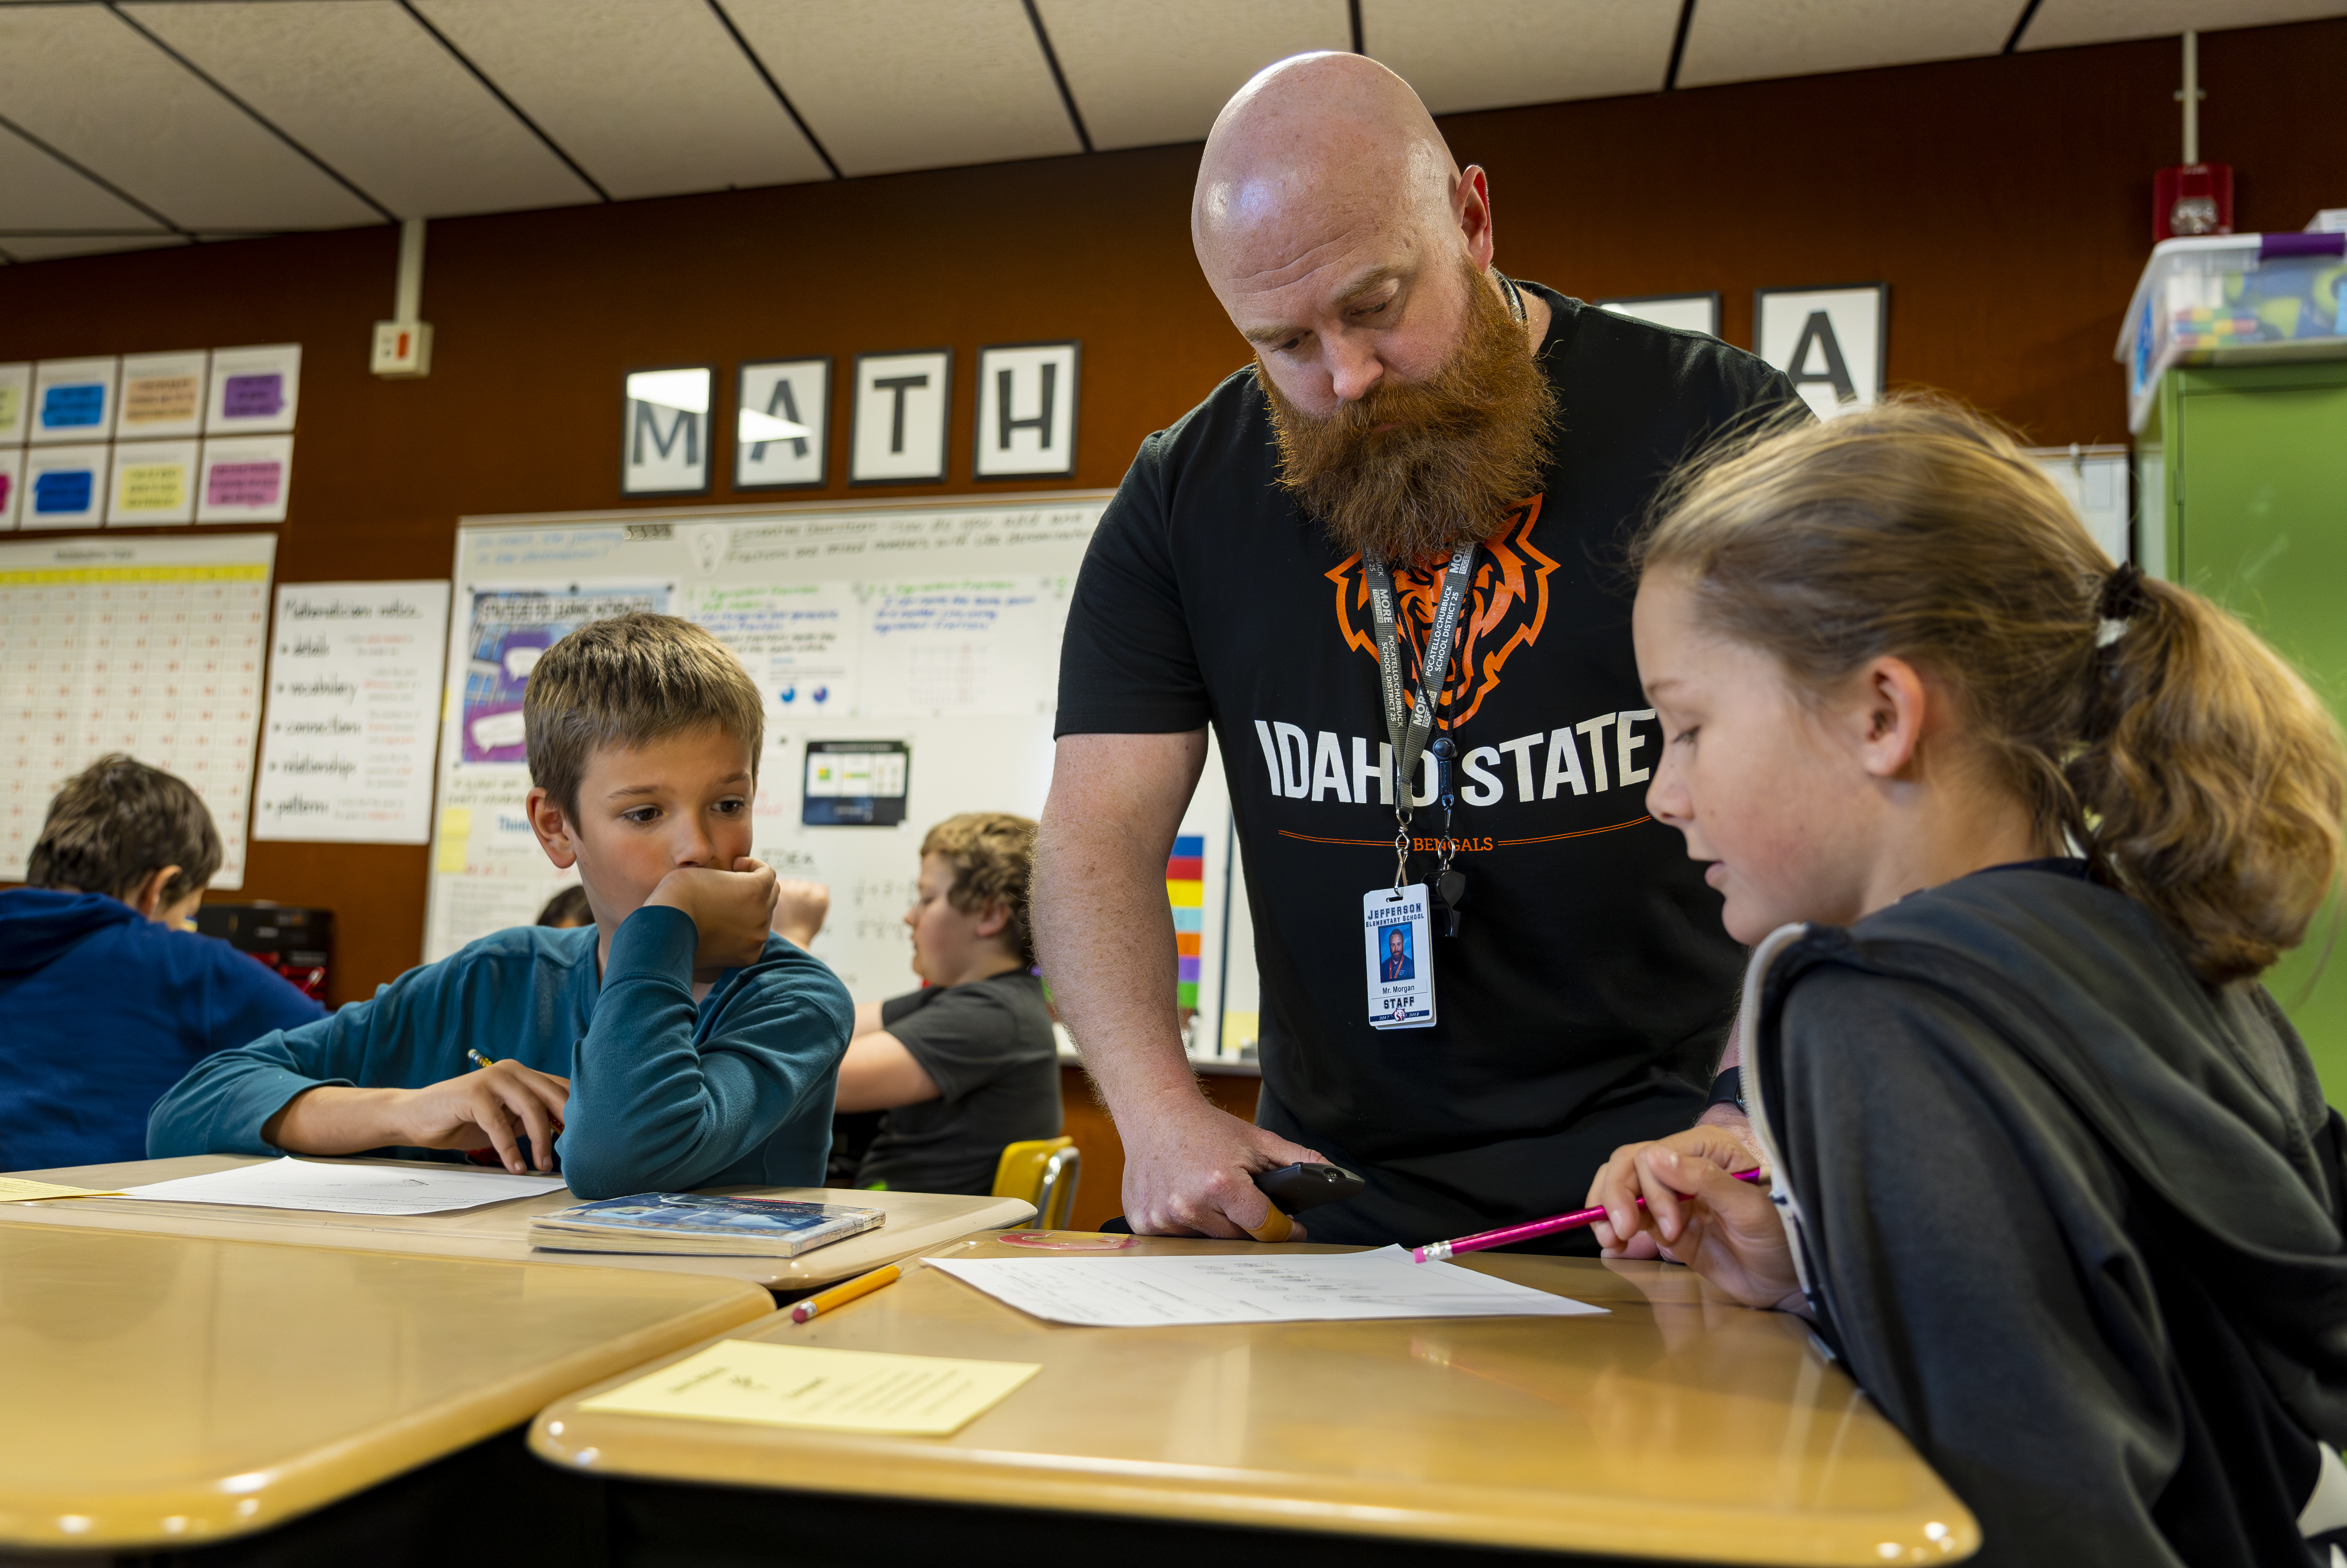 A math teacher instructs elementary students